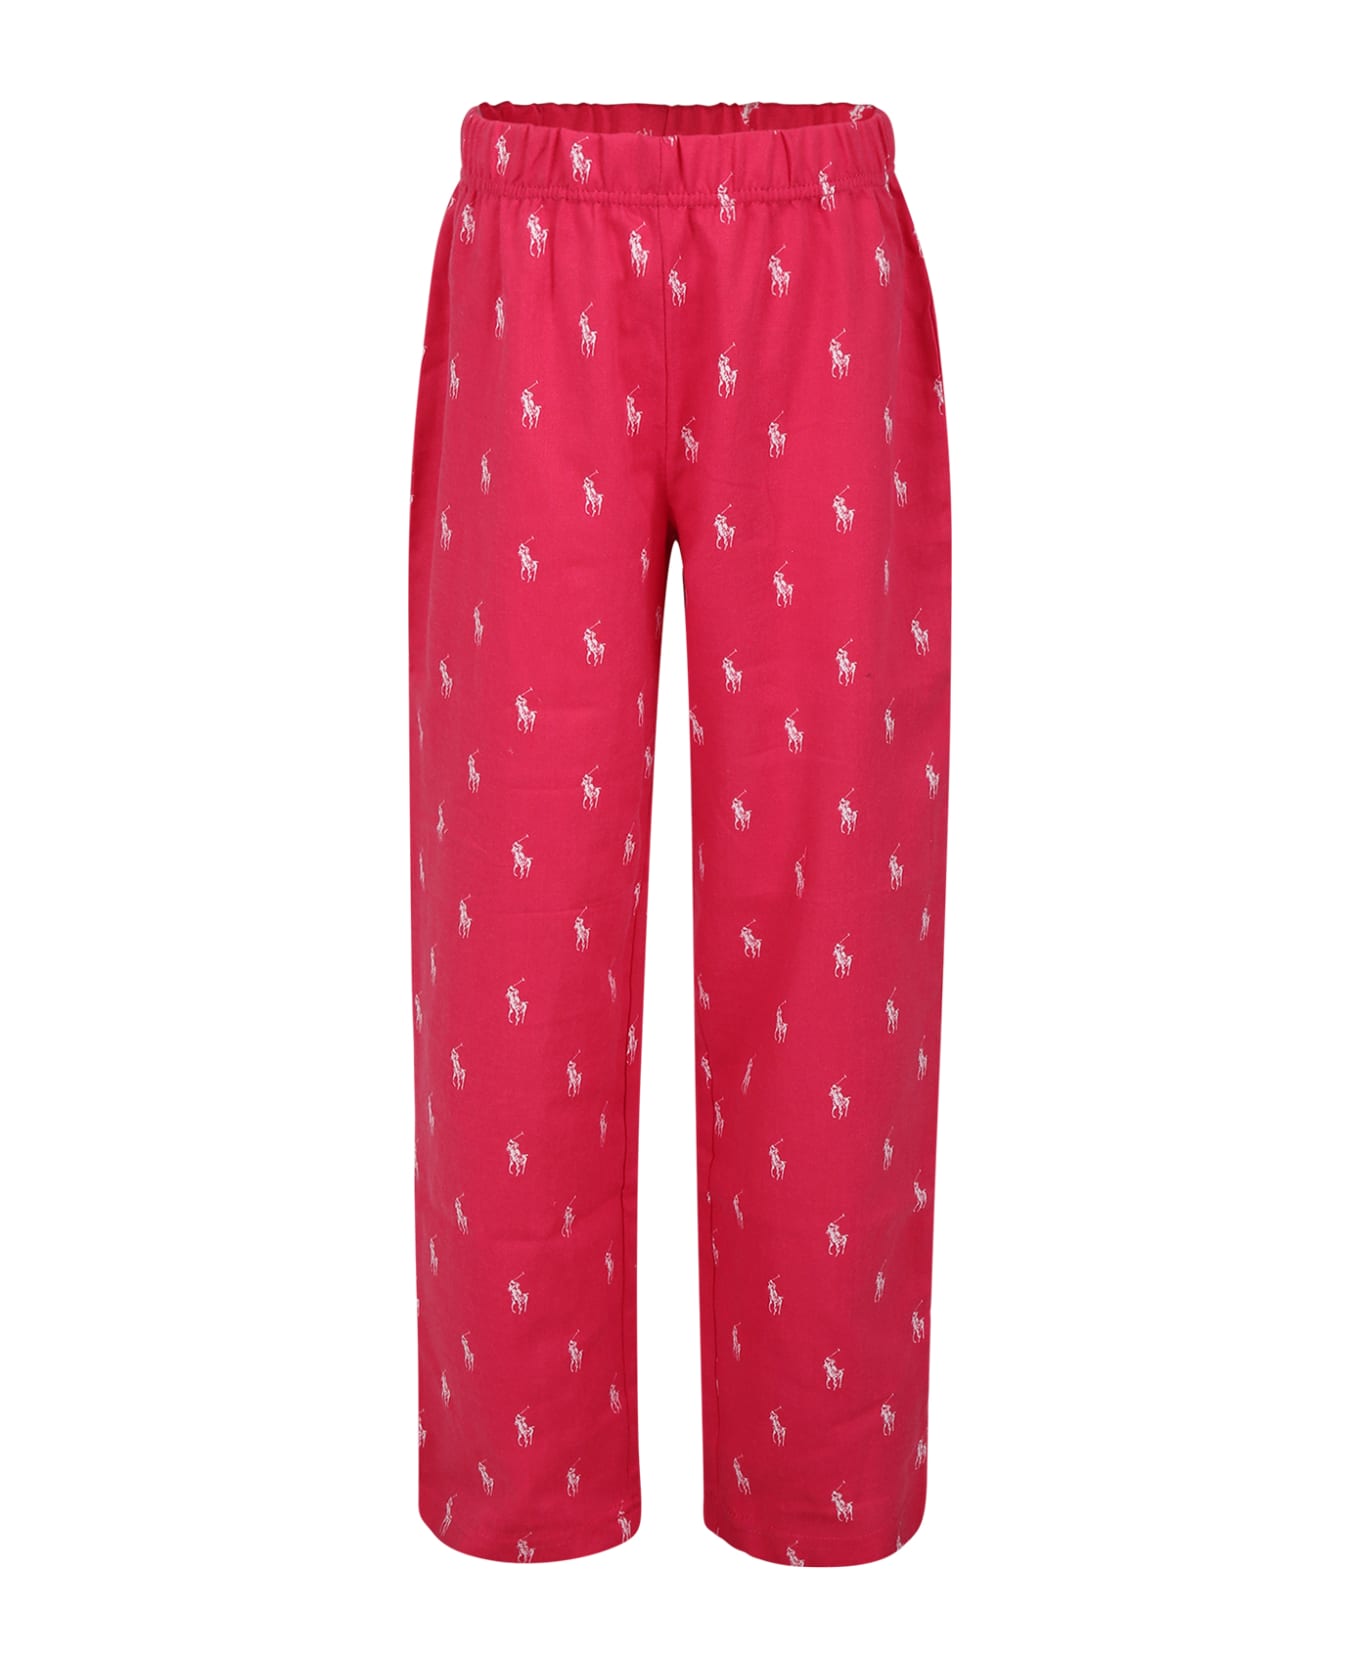 Ralph Lauren Fuchsia Pajamas Pants For Girl - Fuchsia